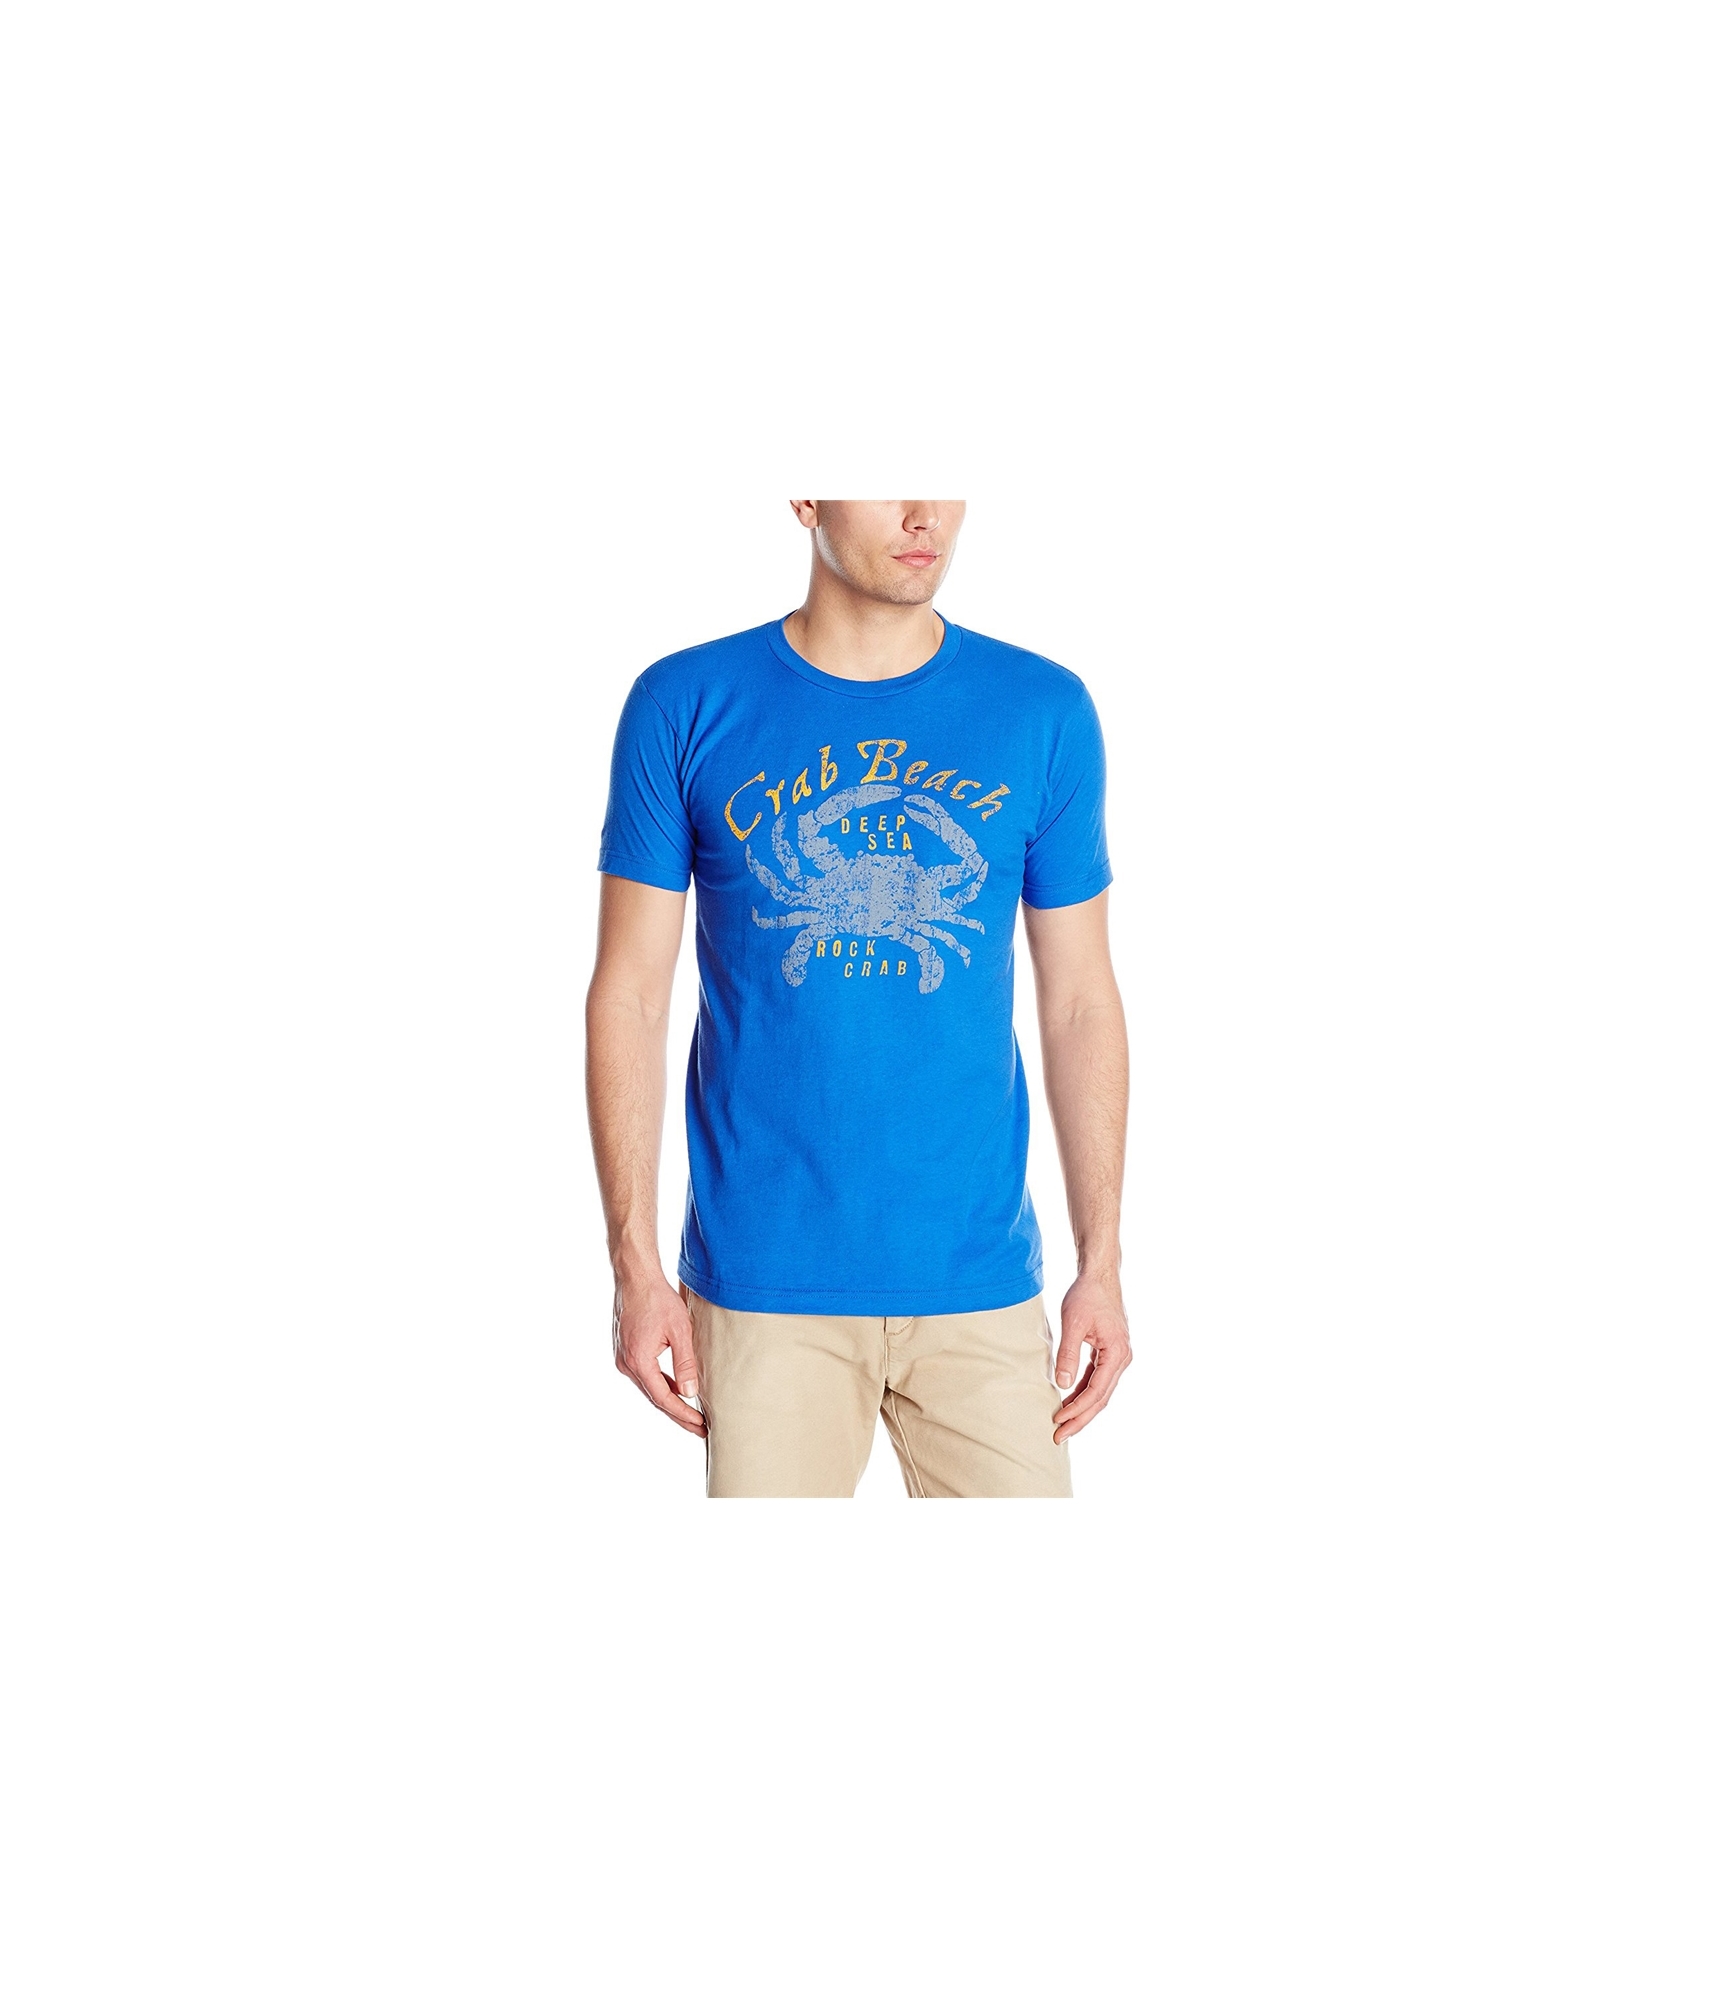 Buy a G.H. Bass & Co. Mens Crab Beach Graphic T-Shirt